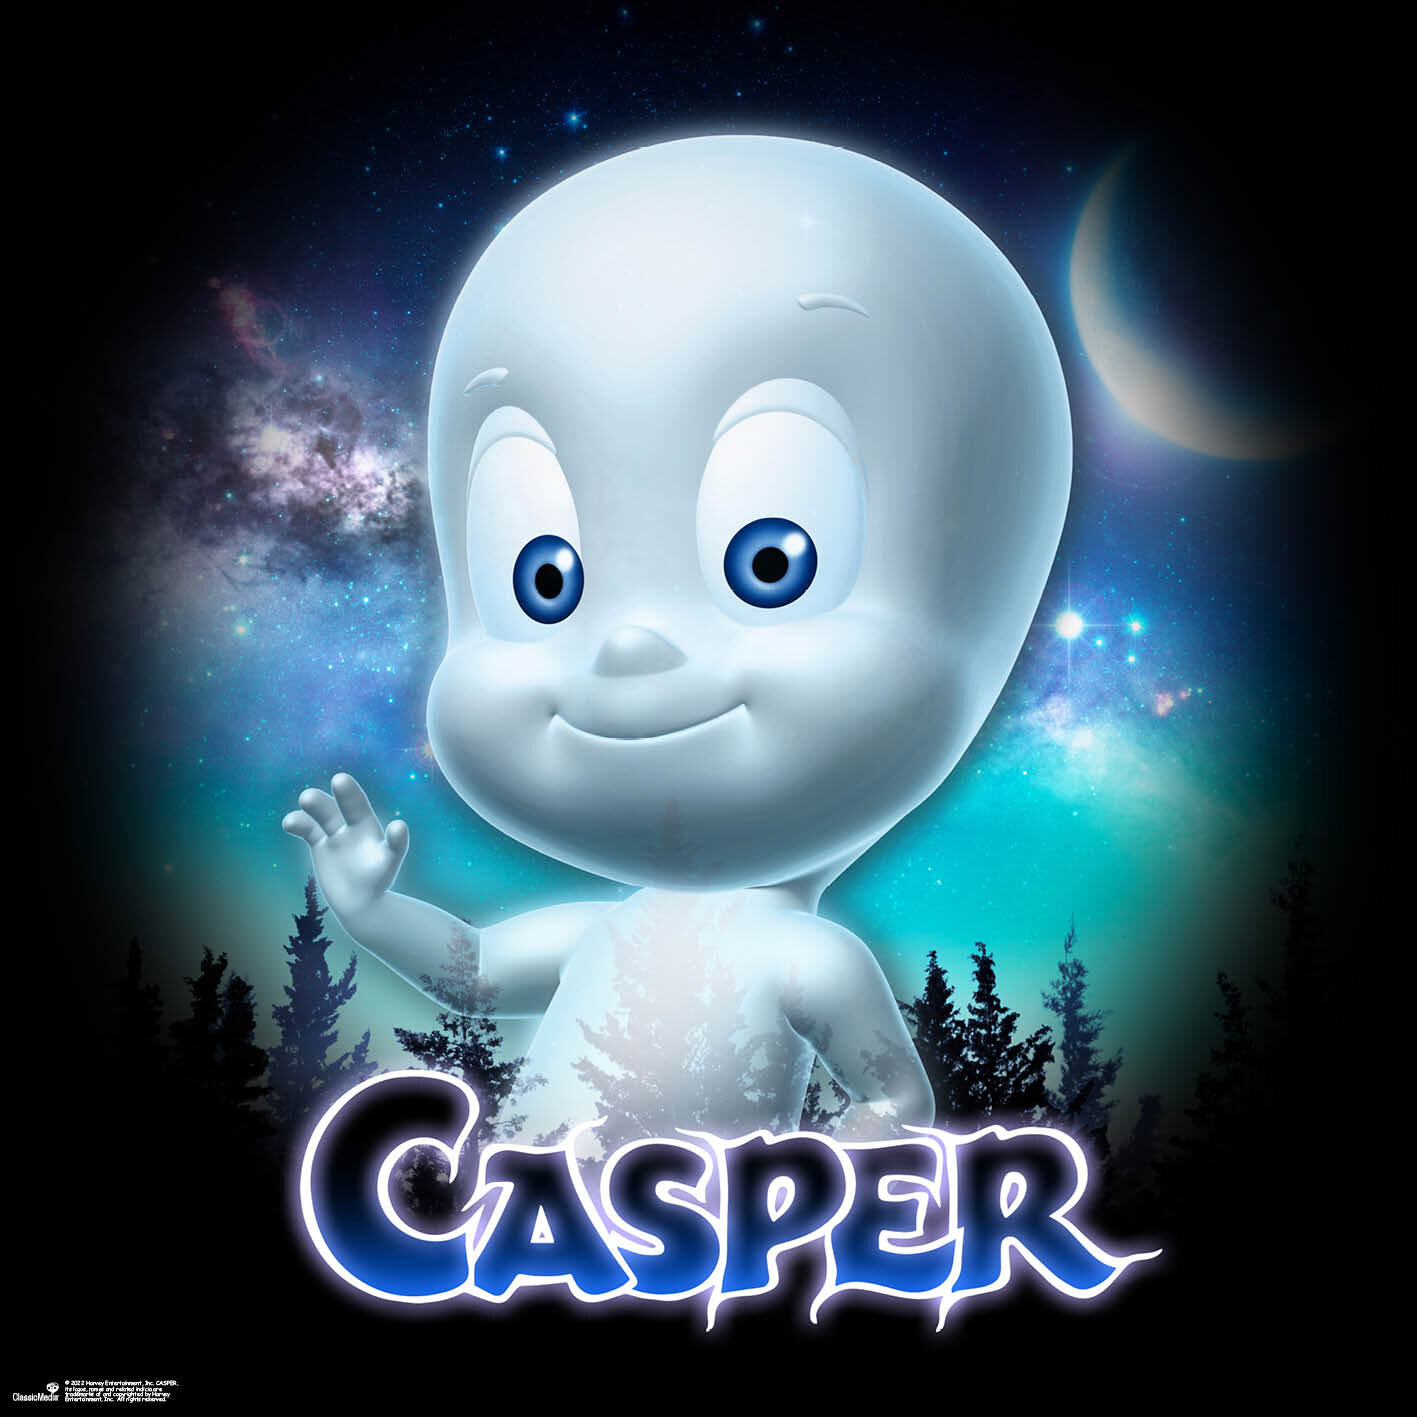 Dreamy Casper - The Friendly Ghost Poster